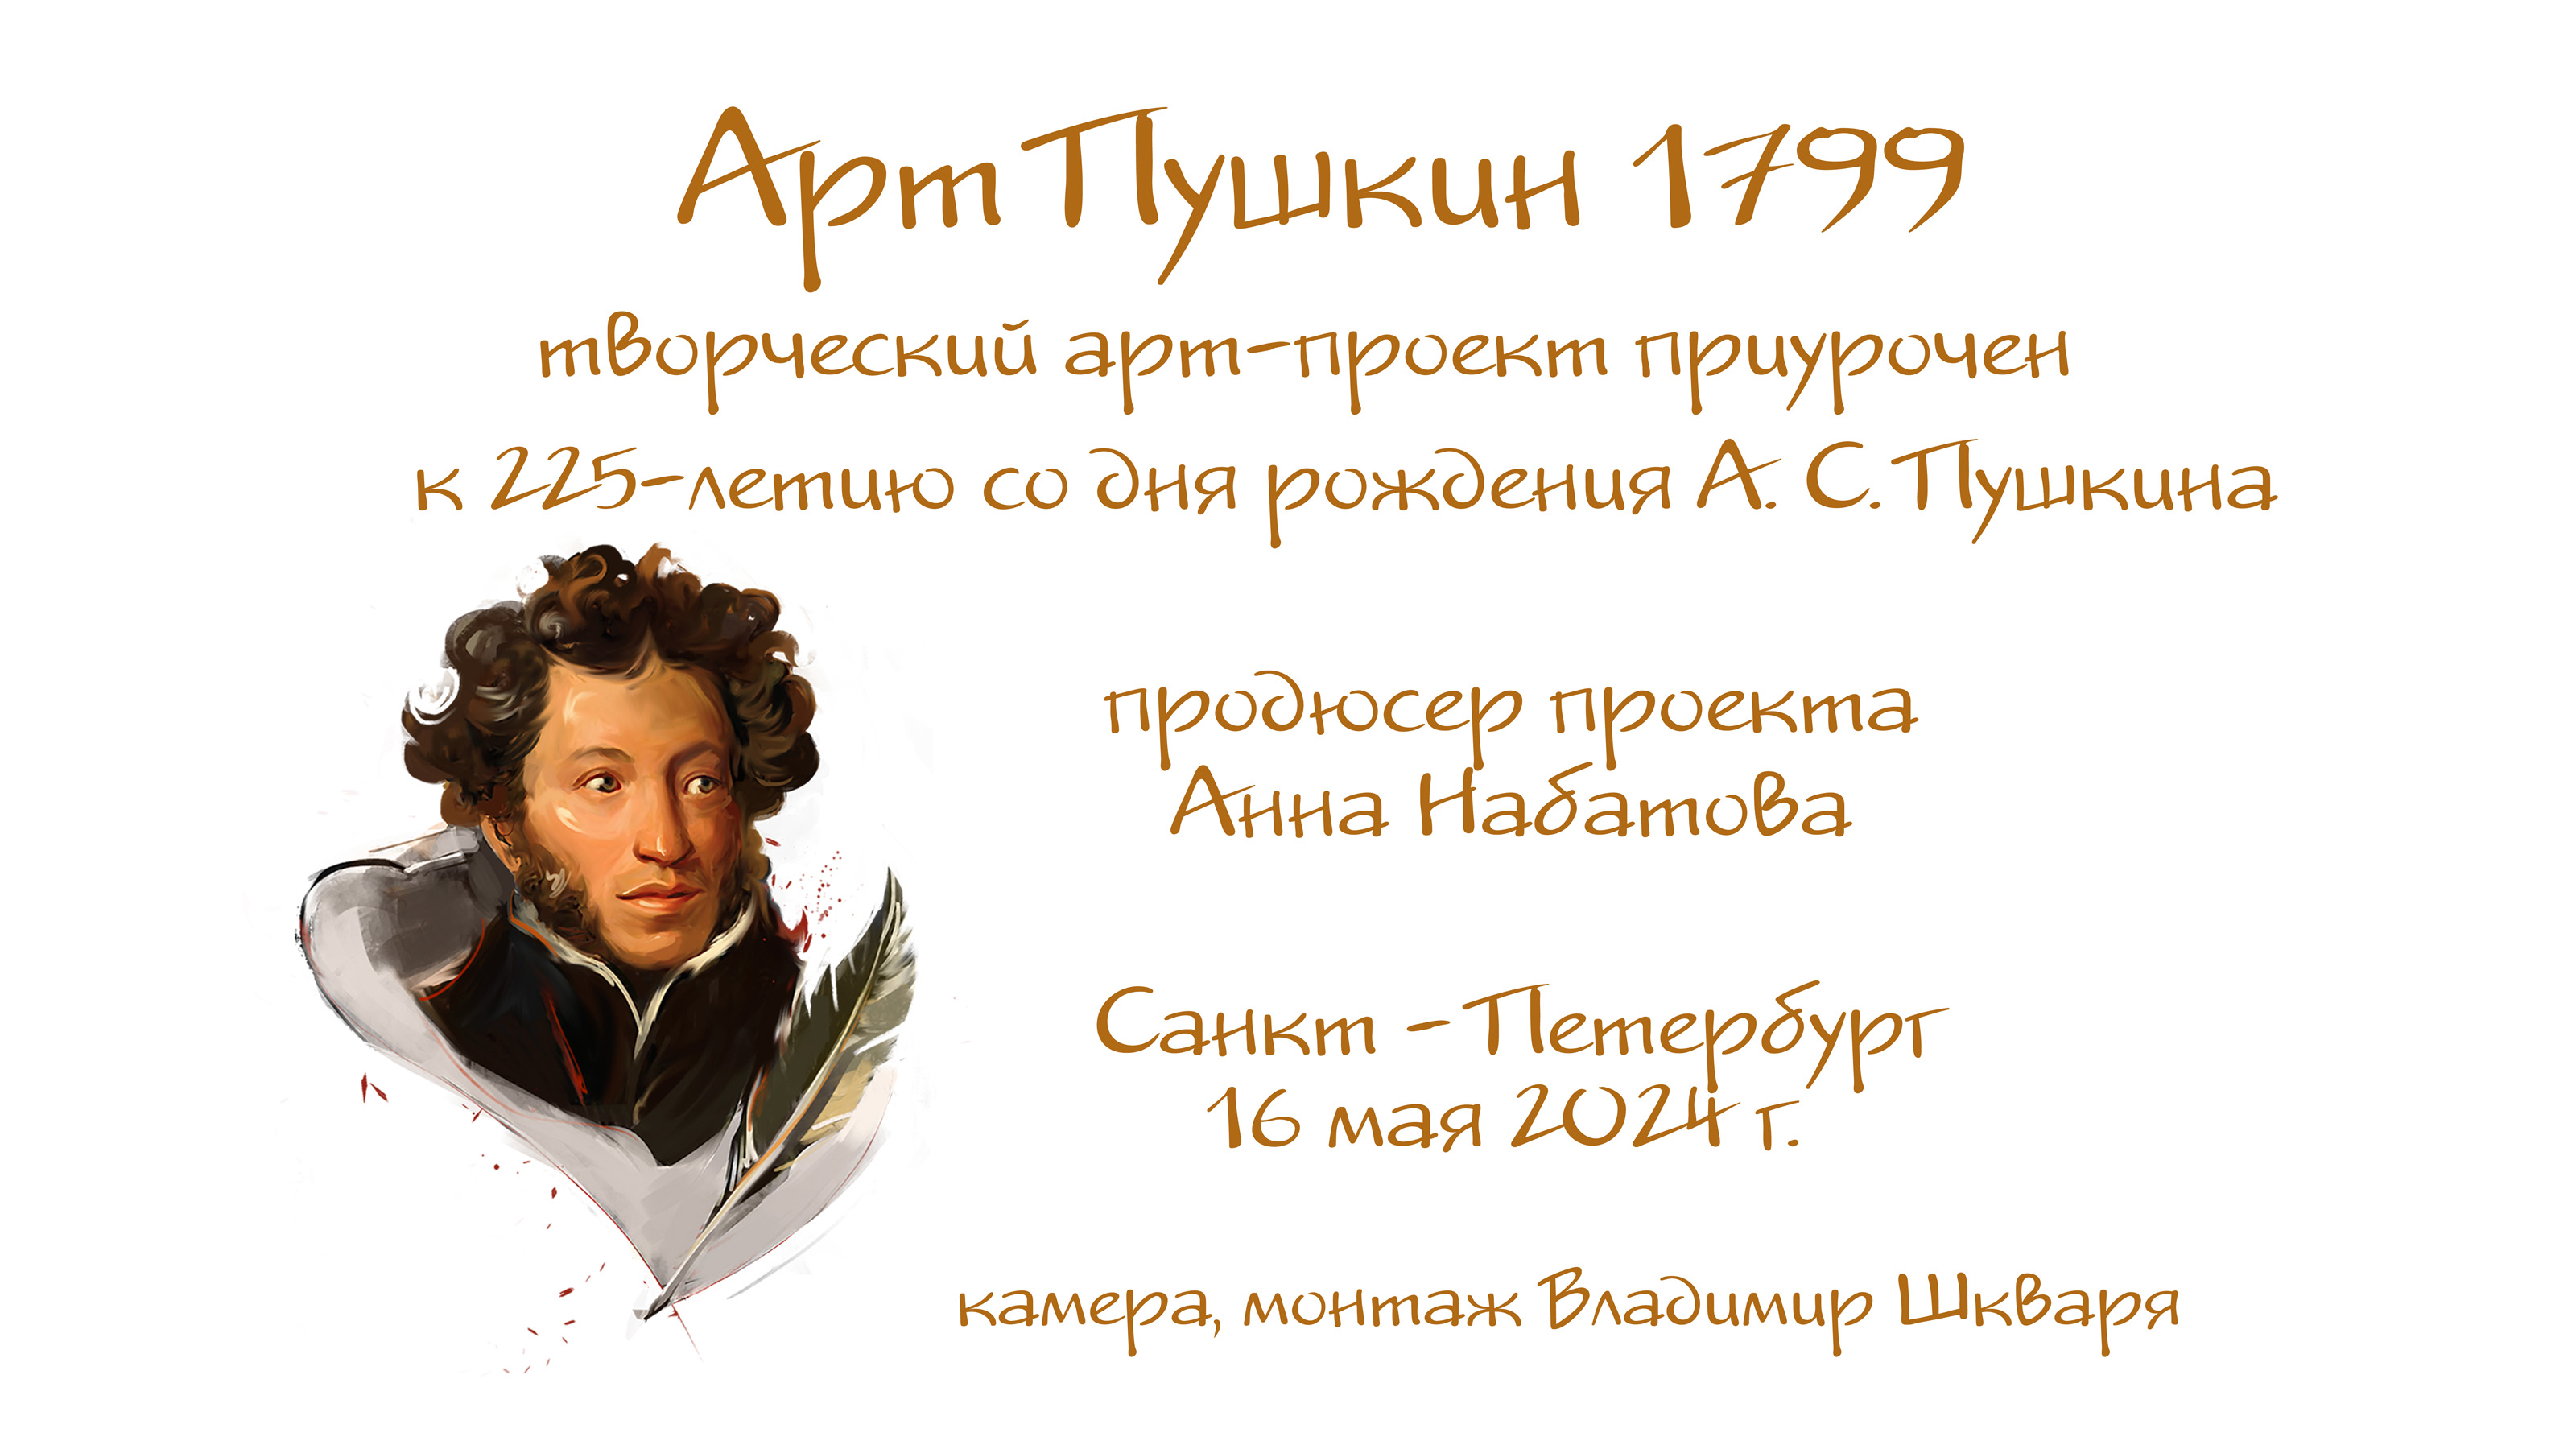 Арт Пушкин 1799.  (2) 225 лет со дня рождения А. С. Пушкина. СПб. 16 мая 2024